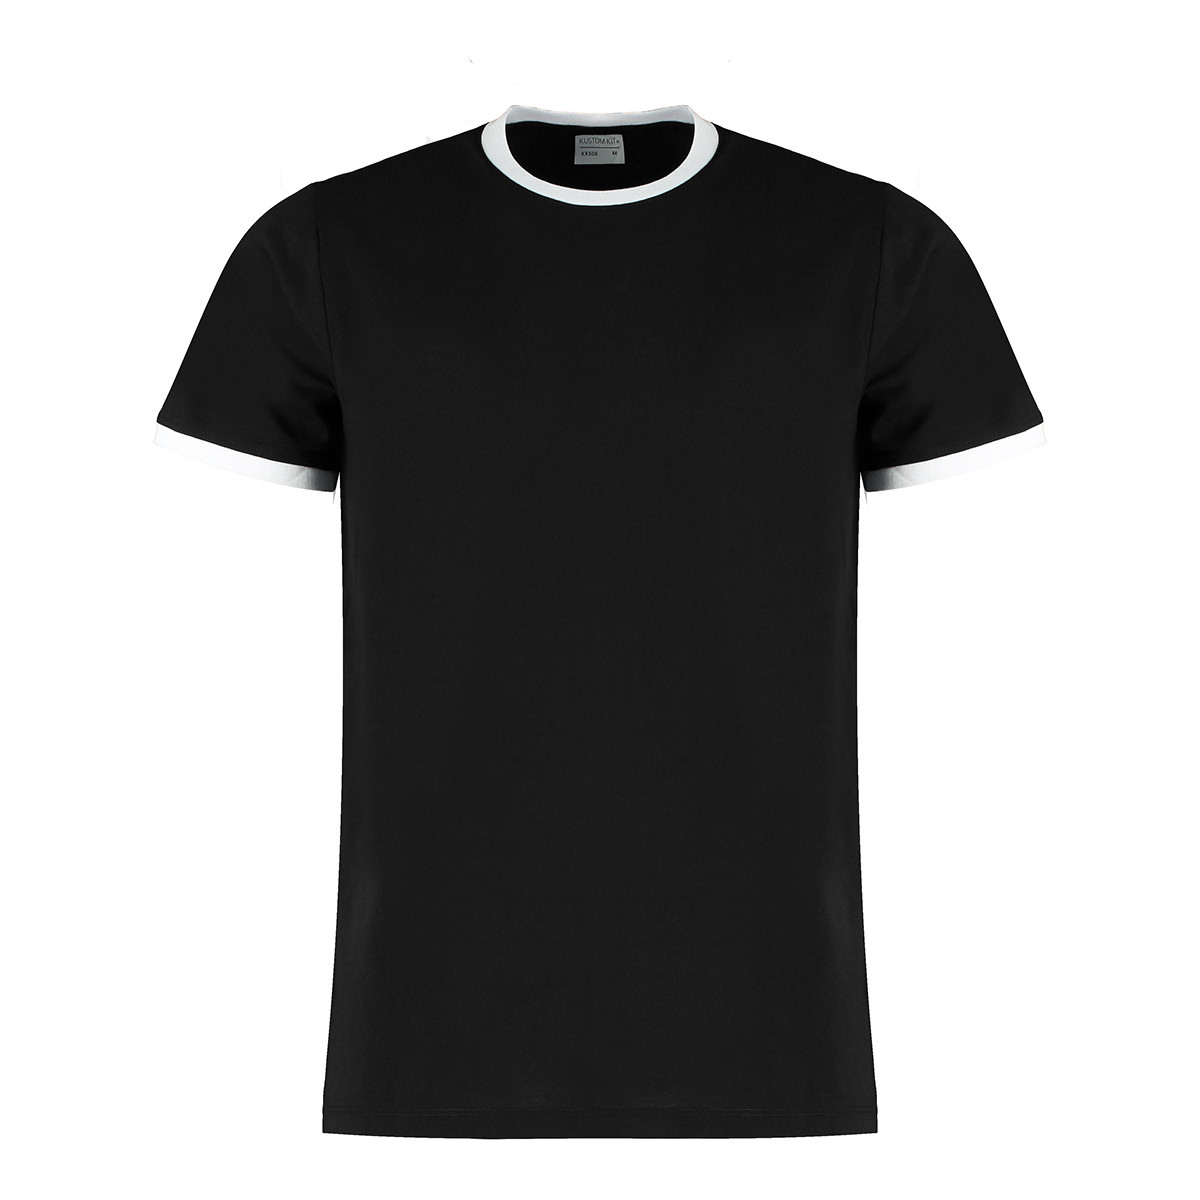 Vêtements Homme T-shirts manches longues Kustom Kit Ringer Noir